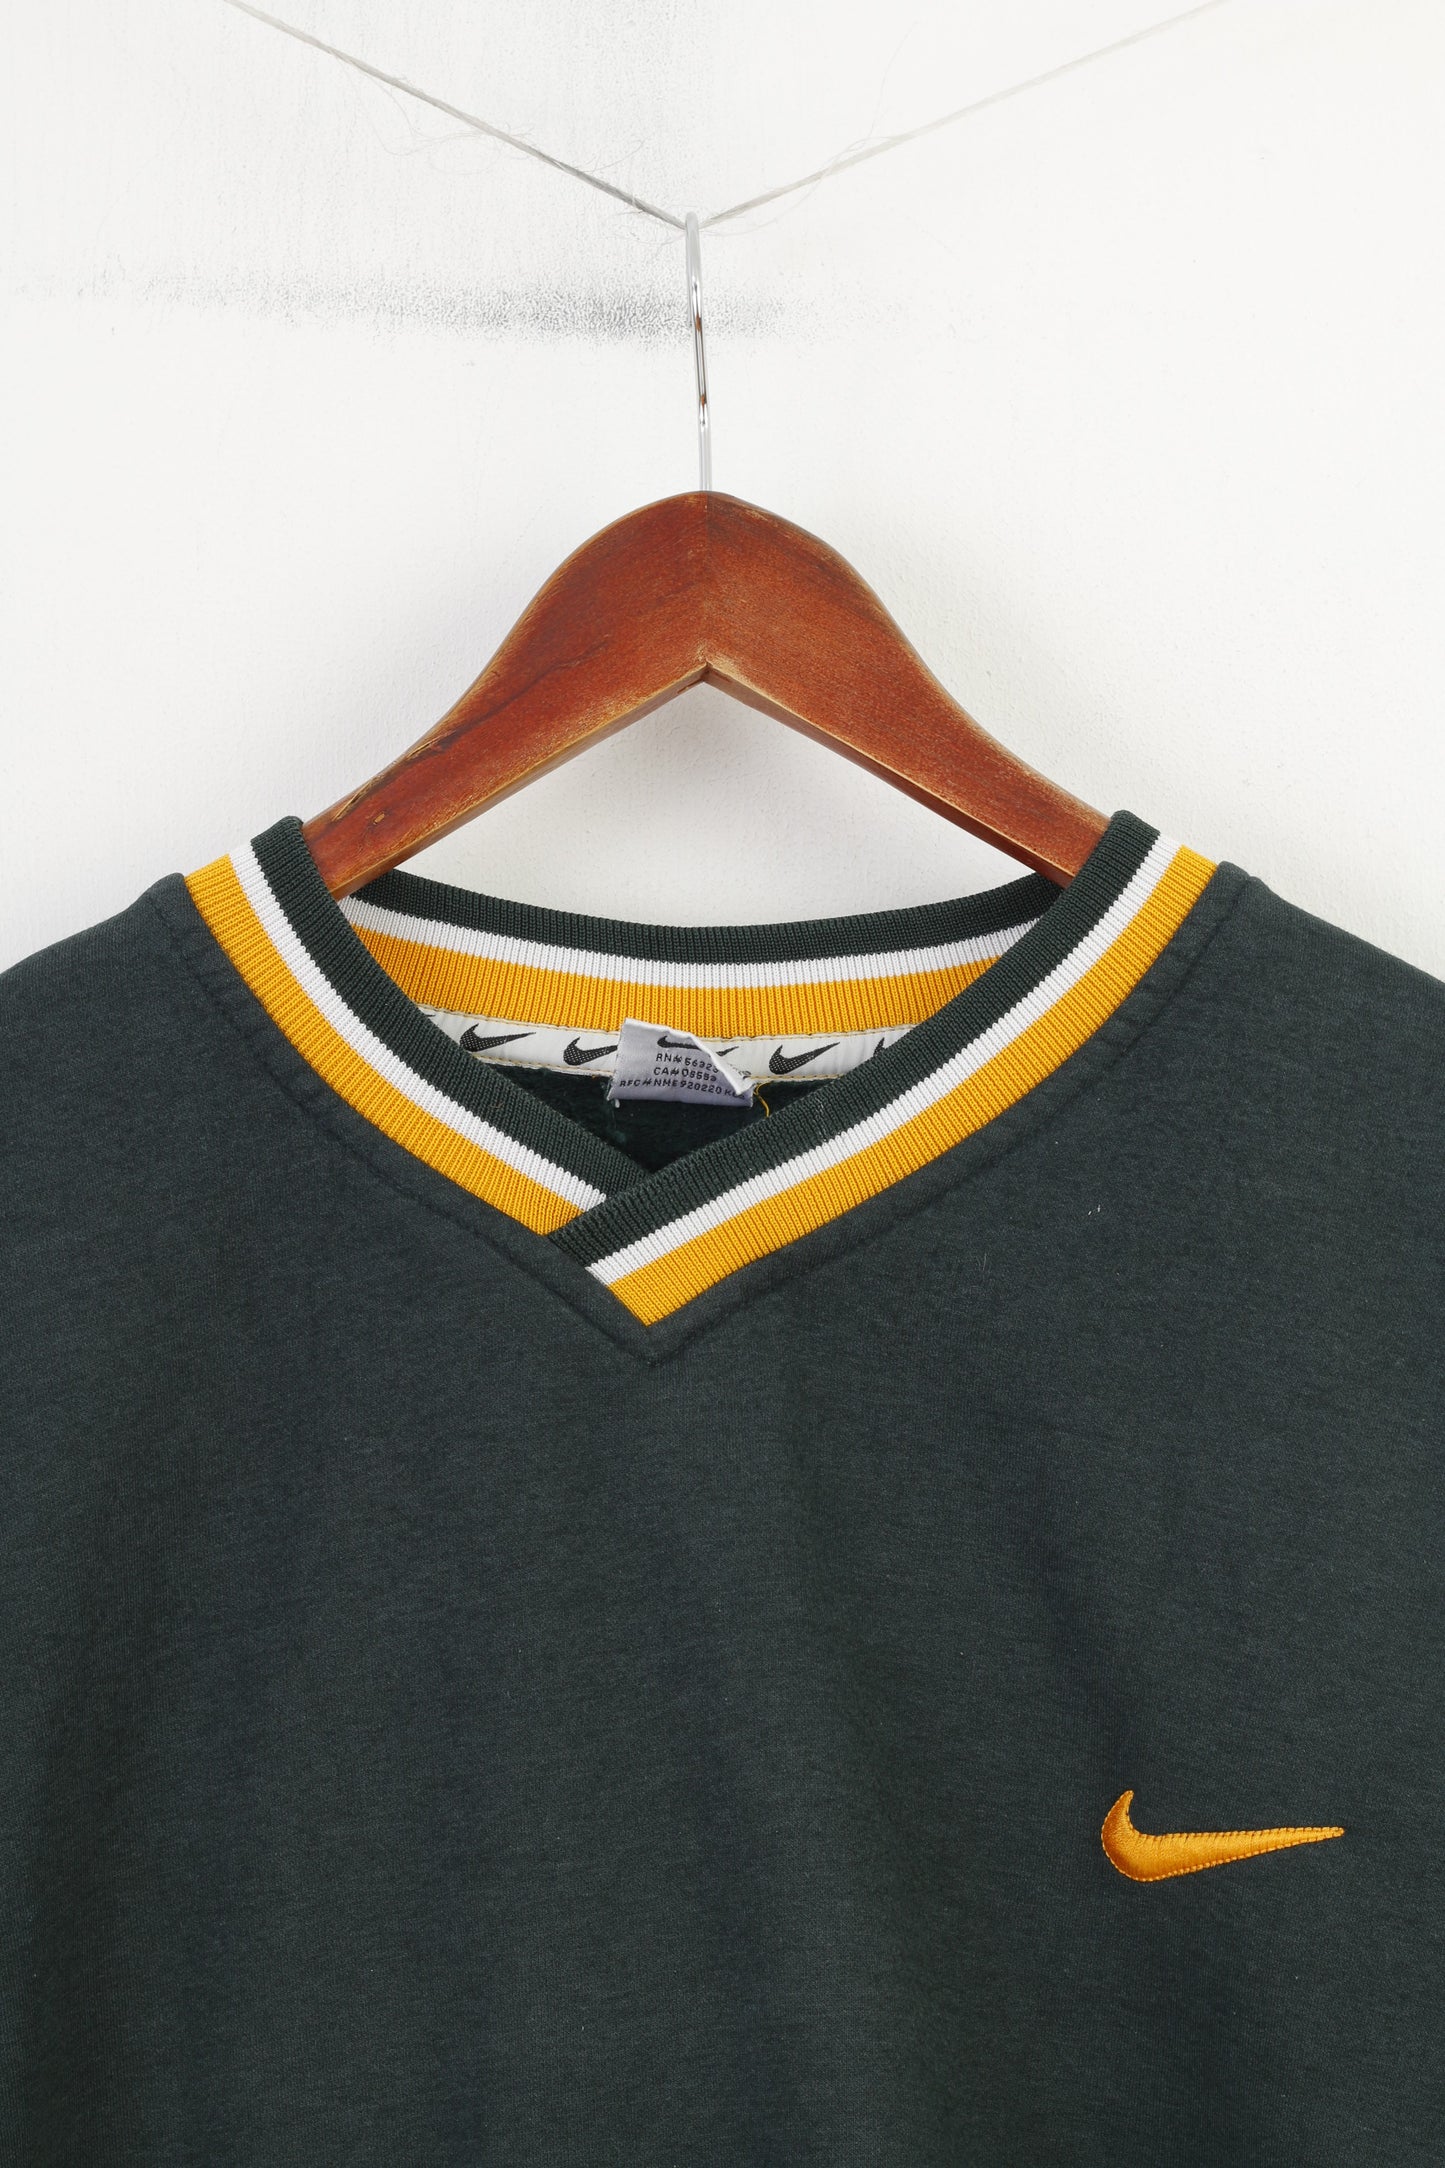 Nike Men XXL Sweatshirt V Neck Vintage 90s Cotton Green Hoodie Service  Top